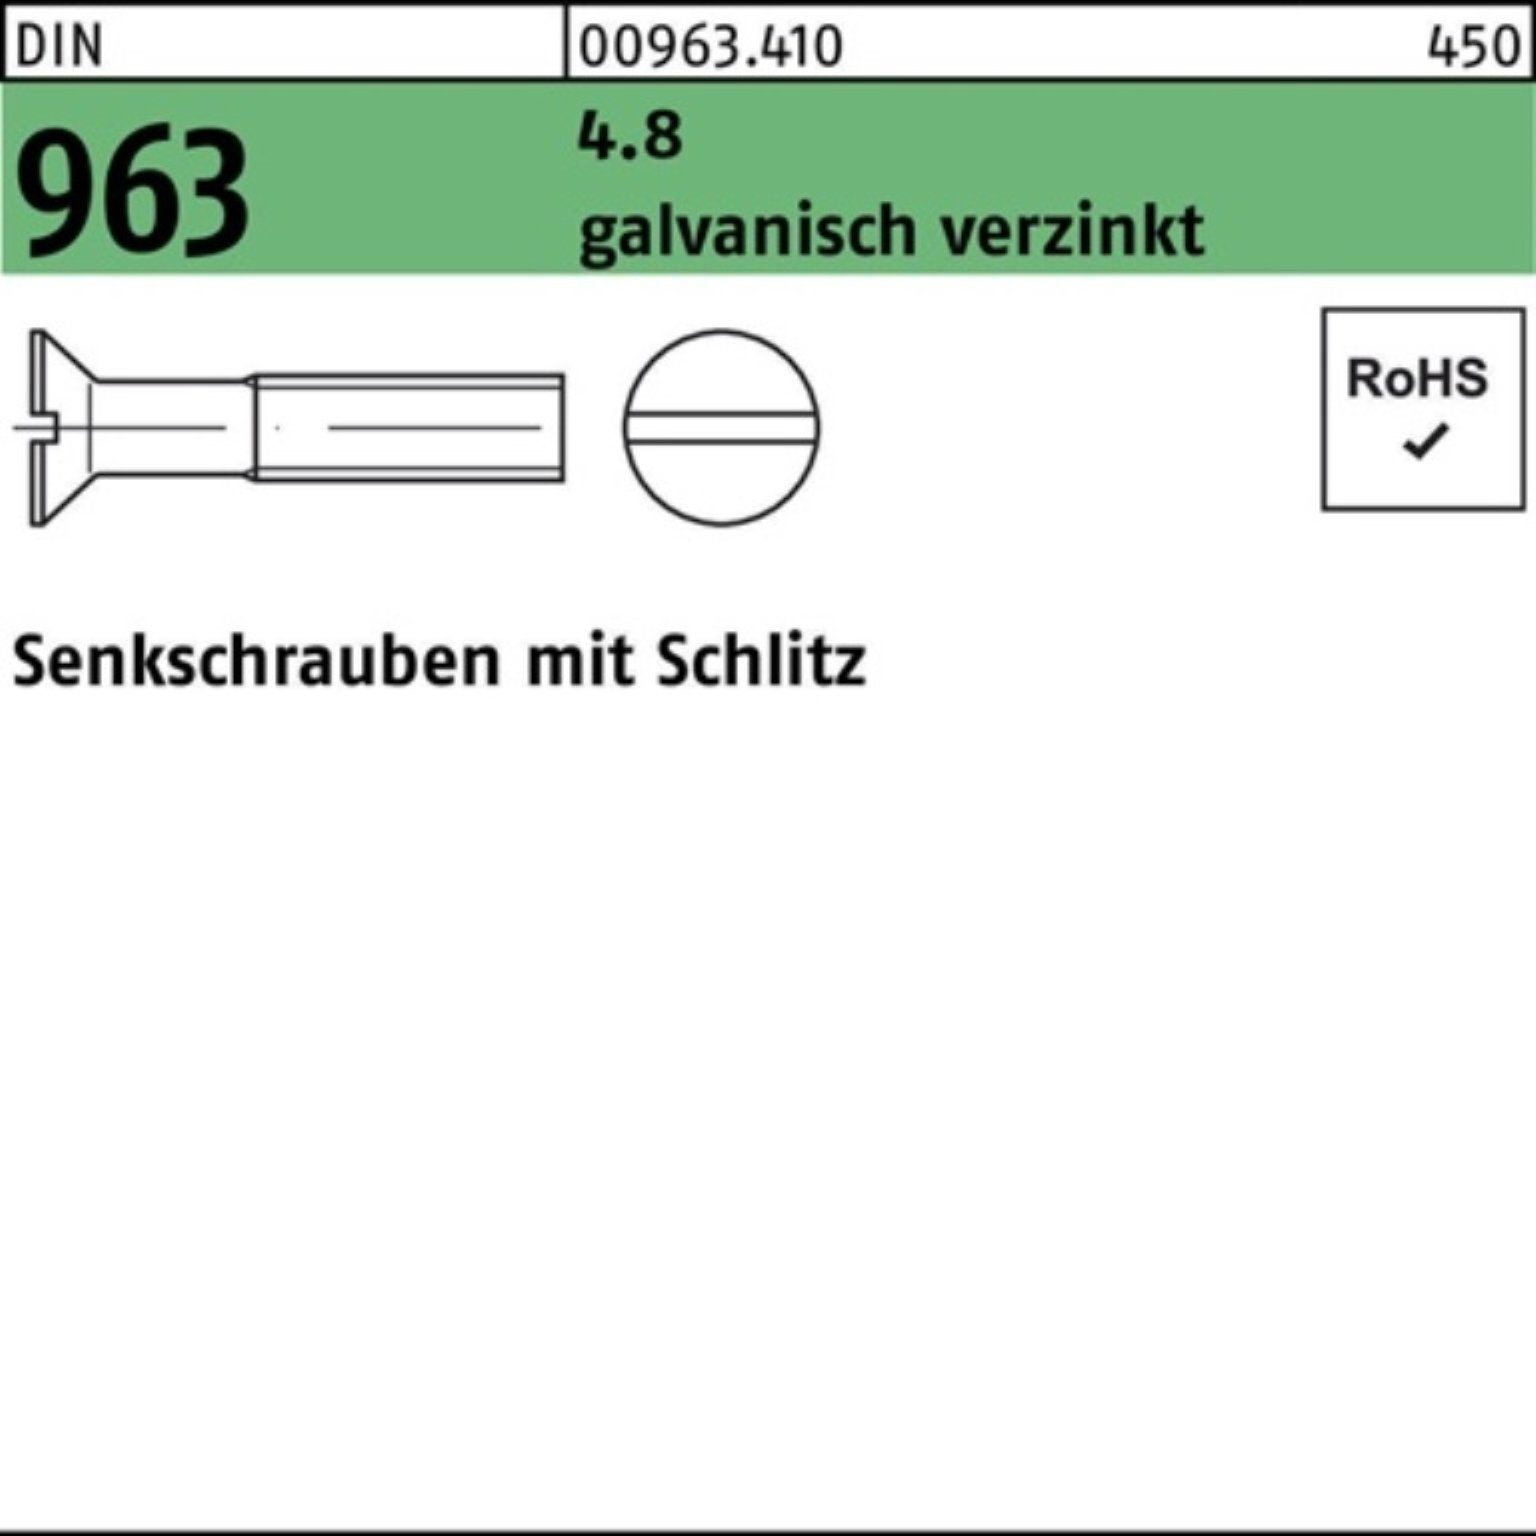 Schlitz DIN Reyher Senkschraube 4.8 galv.verz. 12 Senkschraube Pack 200er Stü M4x 963 200